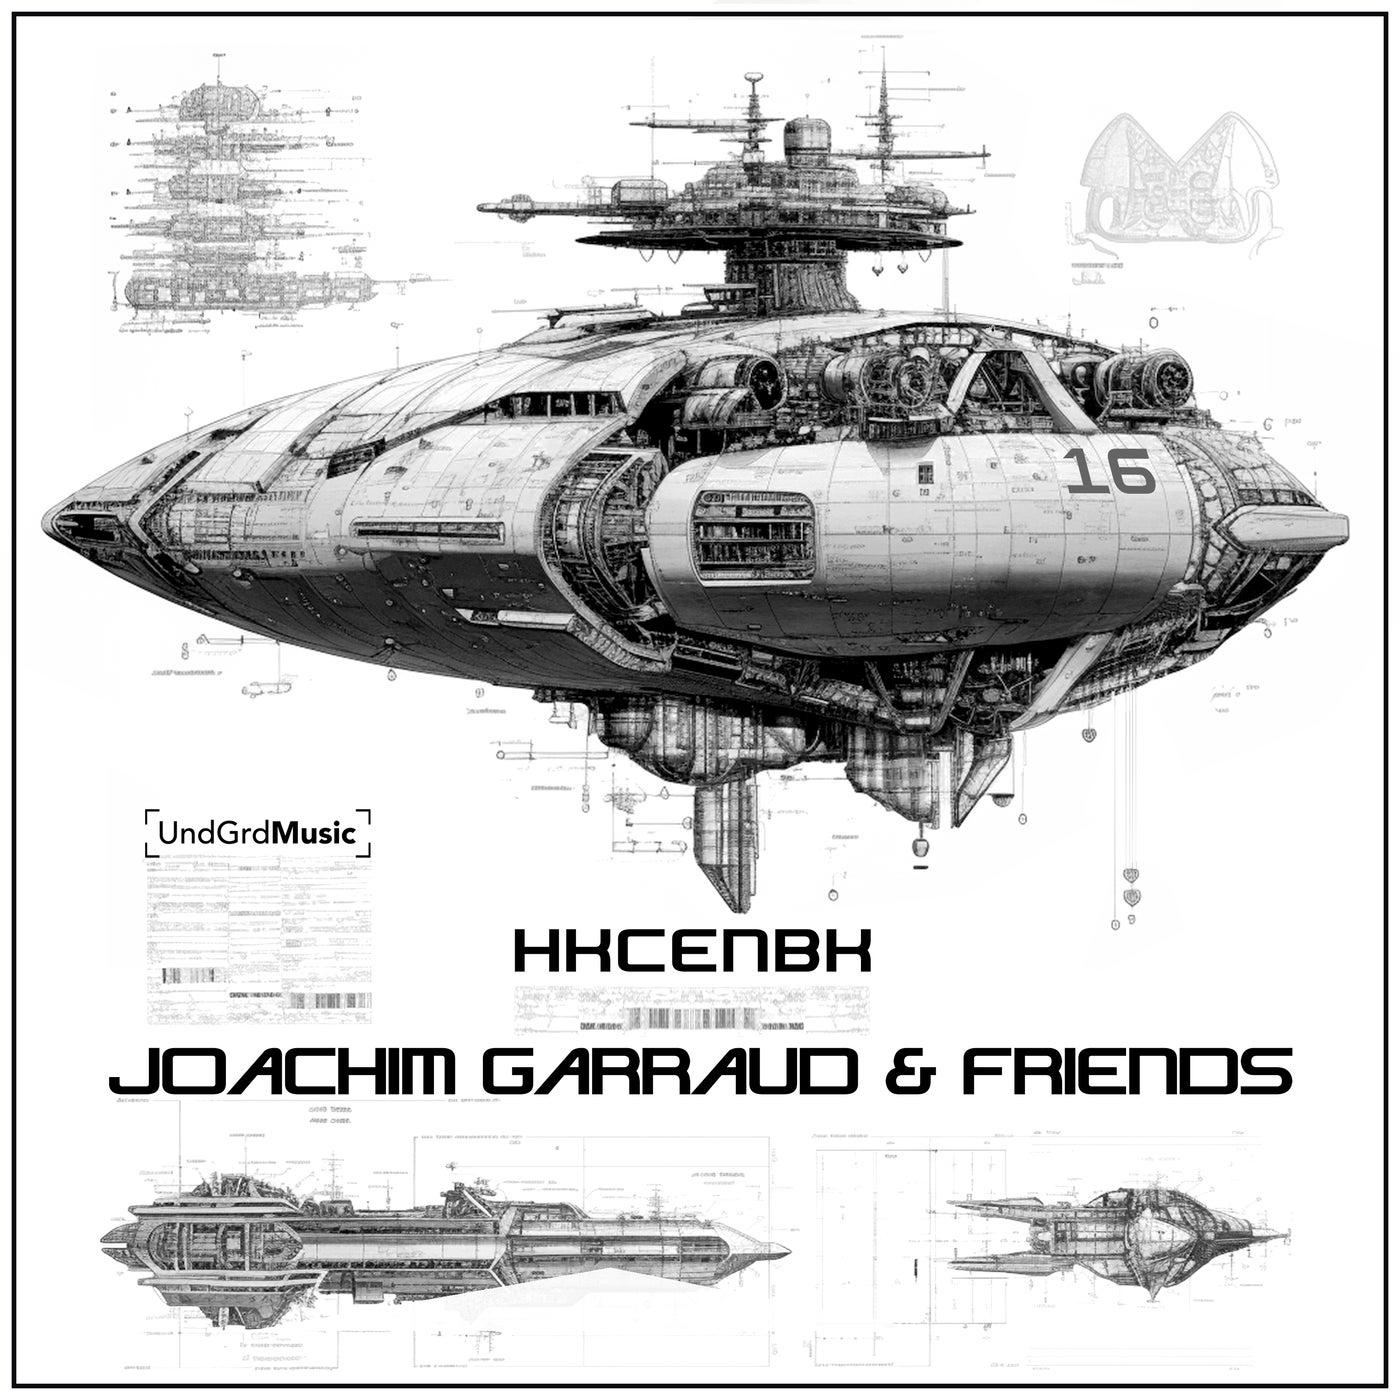 Joachim Garraud & Friends - HKCENBK